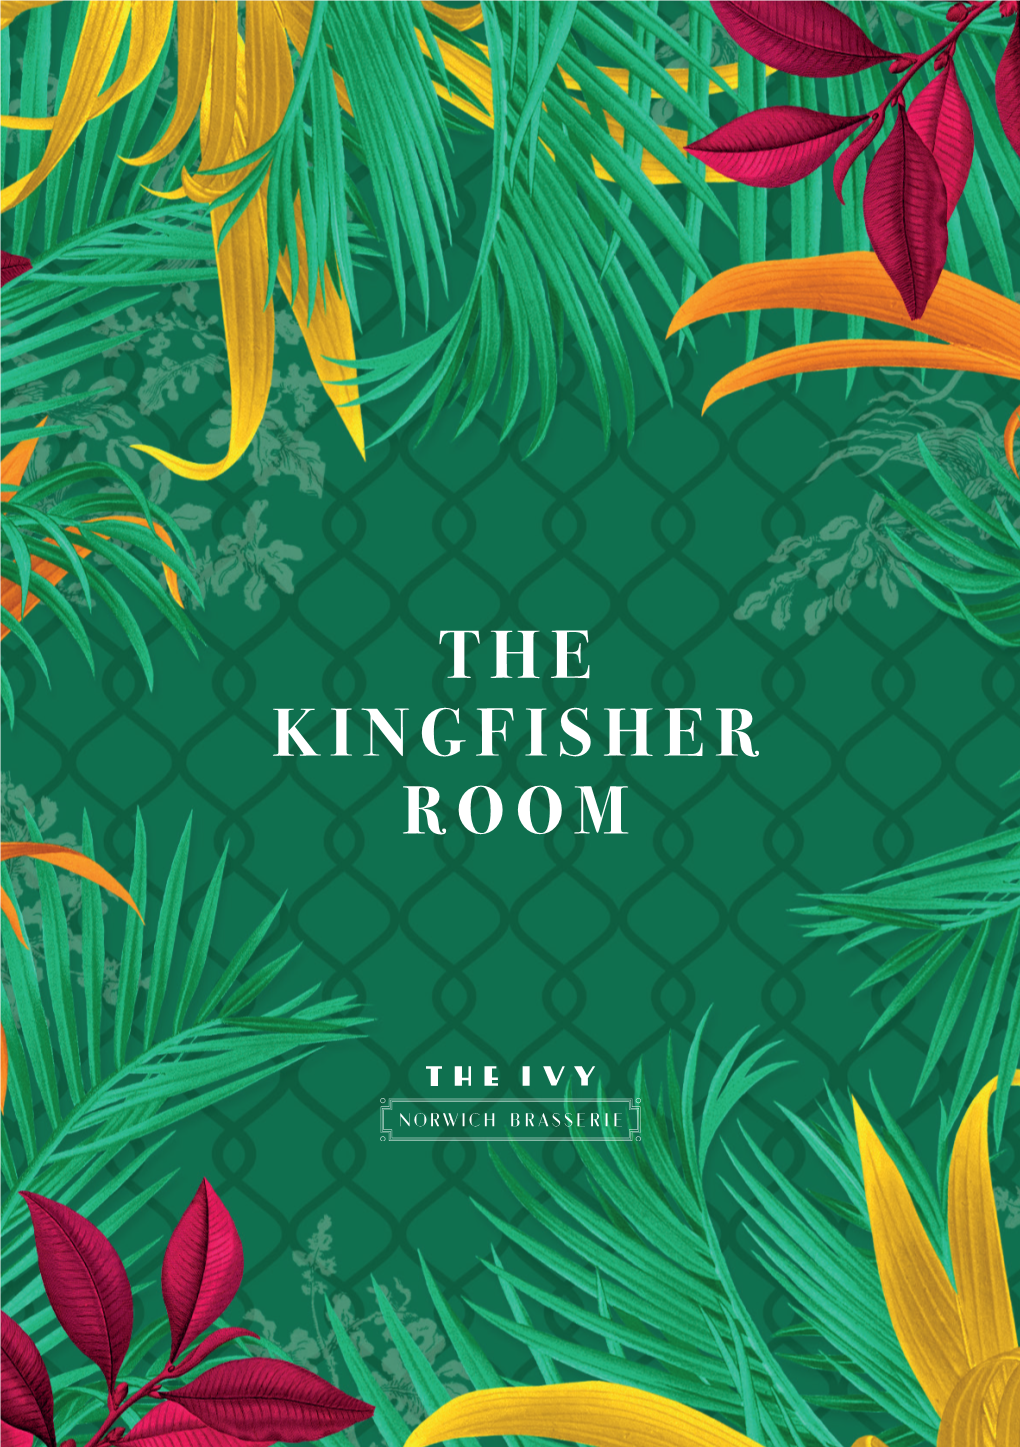 THE KINGFISHER ROOM the Kingfisher Room